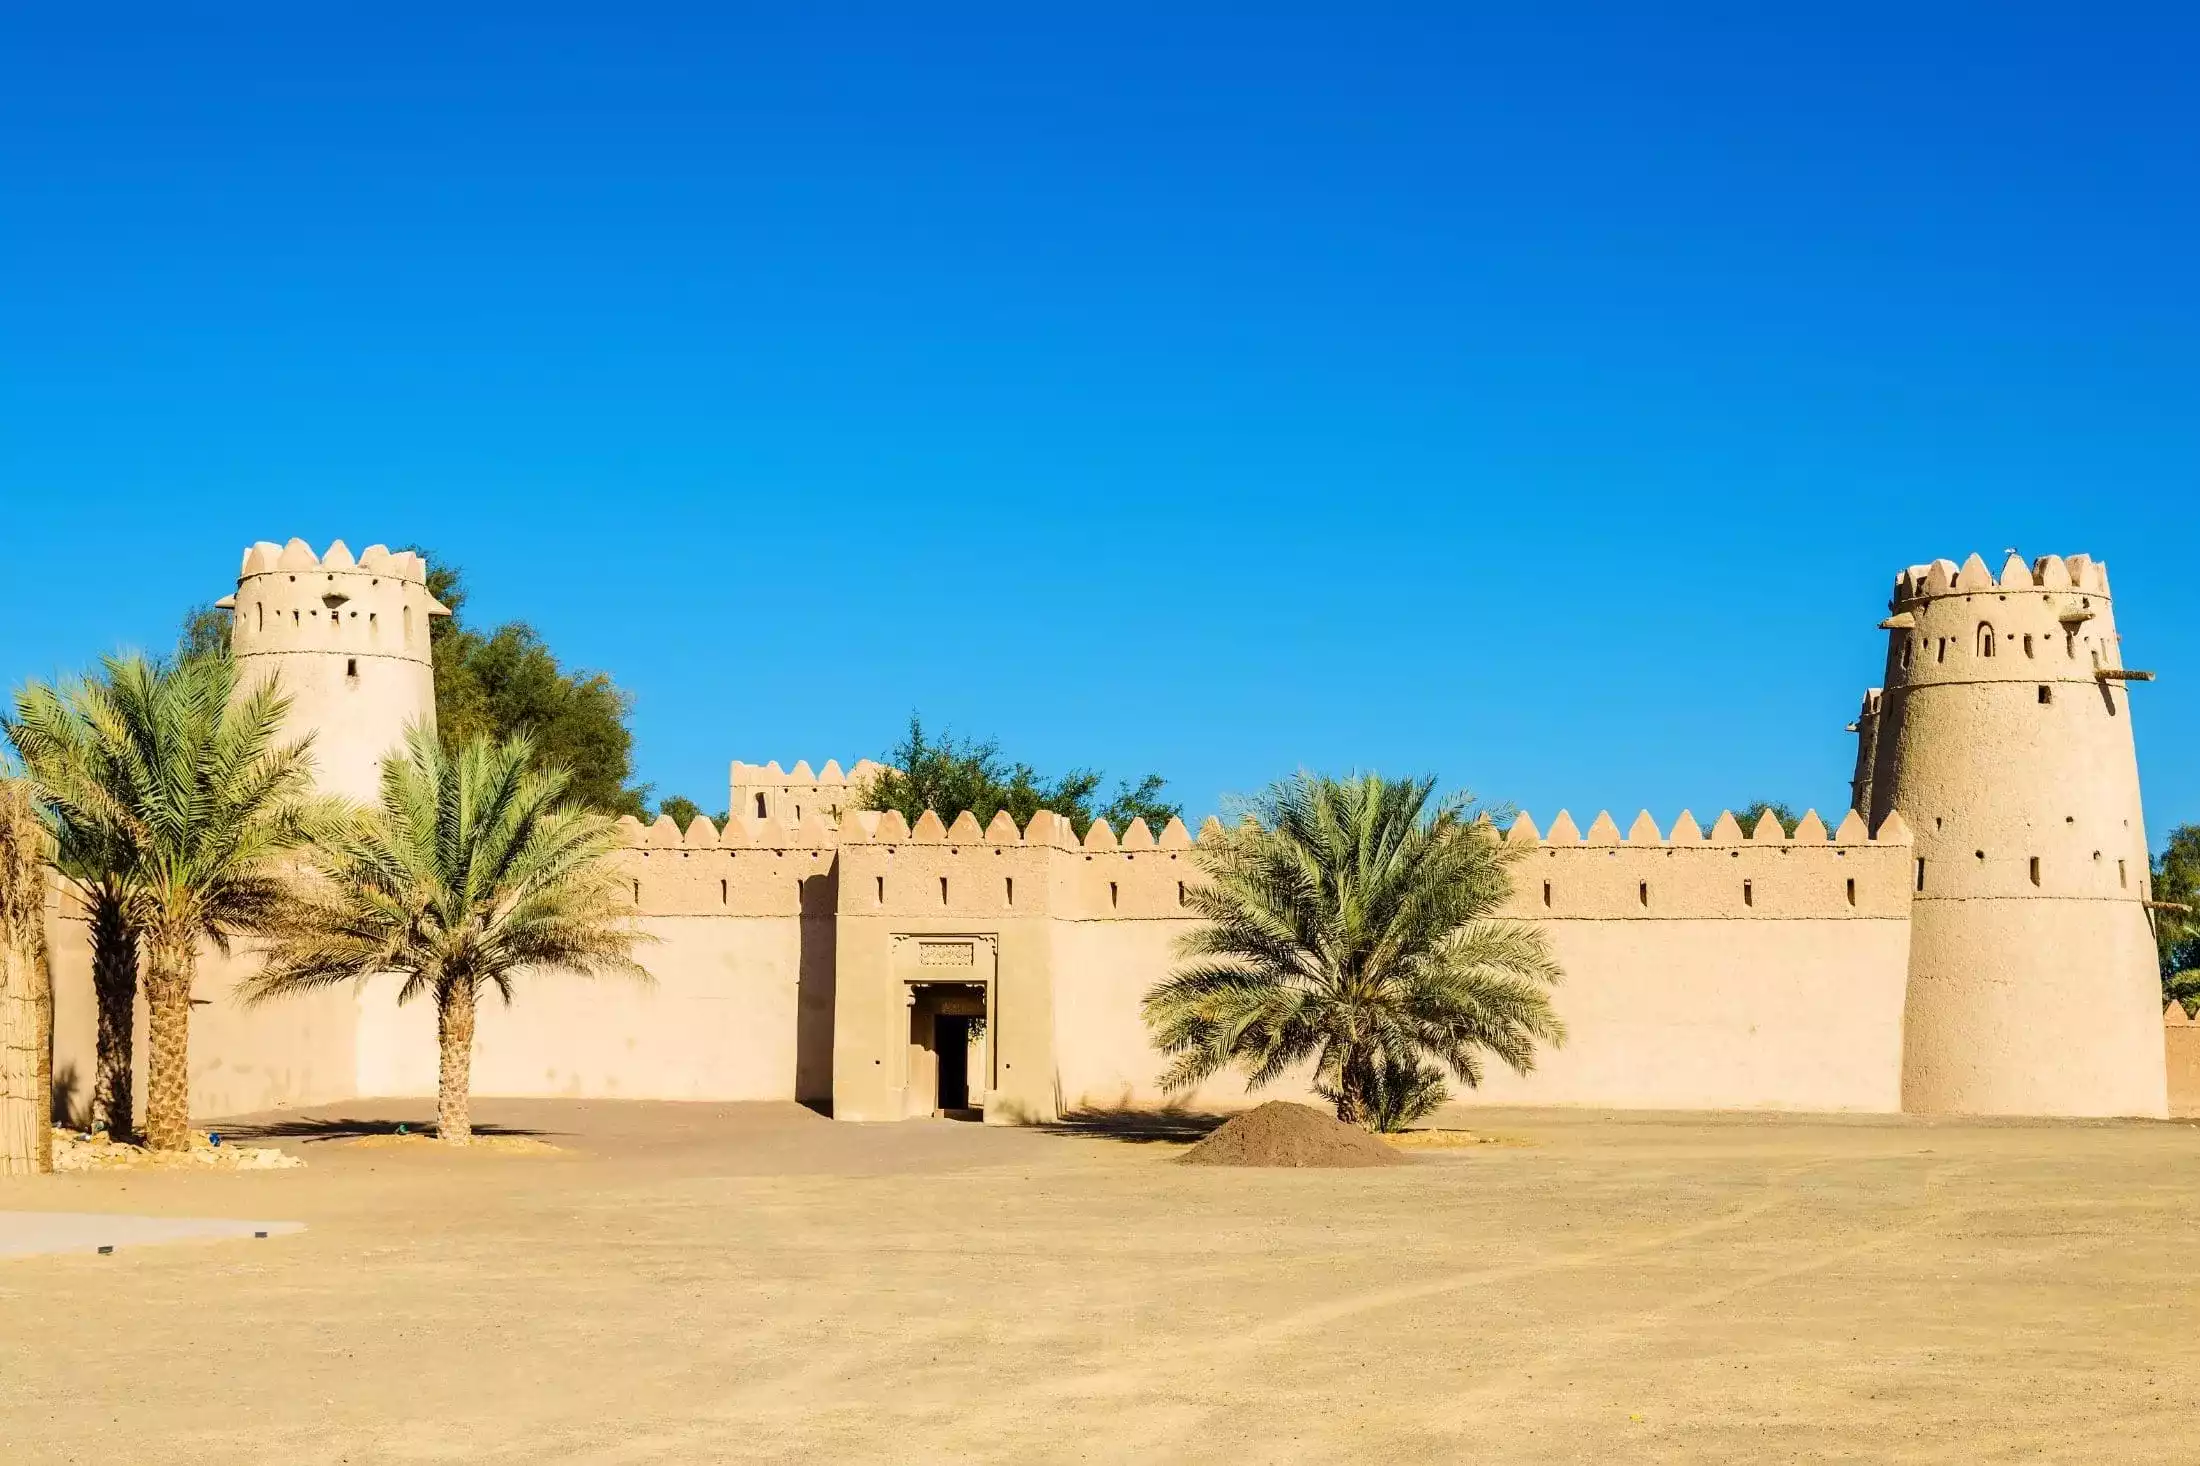 Al Jahili Fort in Al Ain, UAE